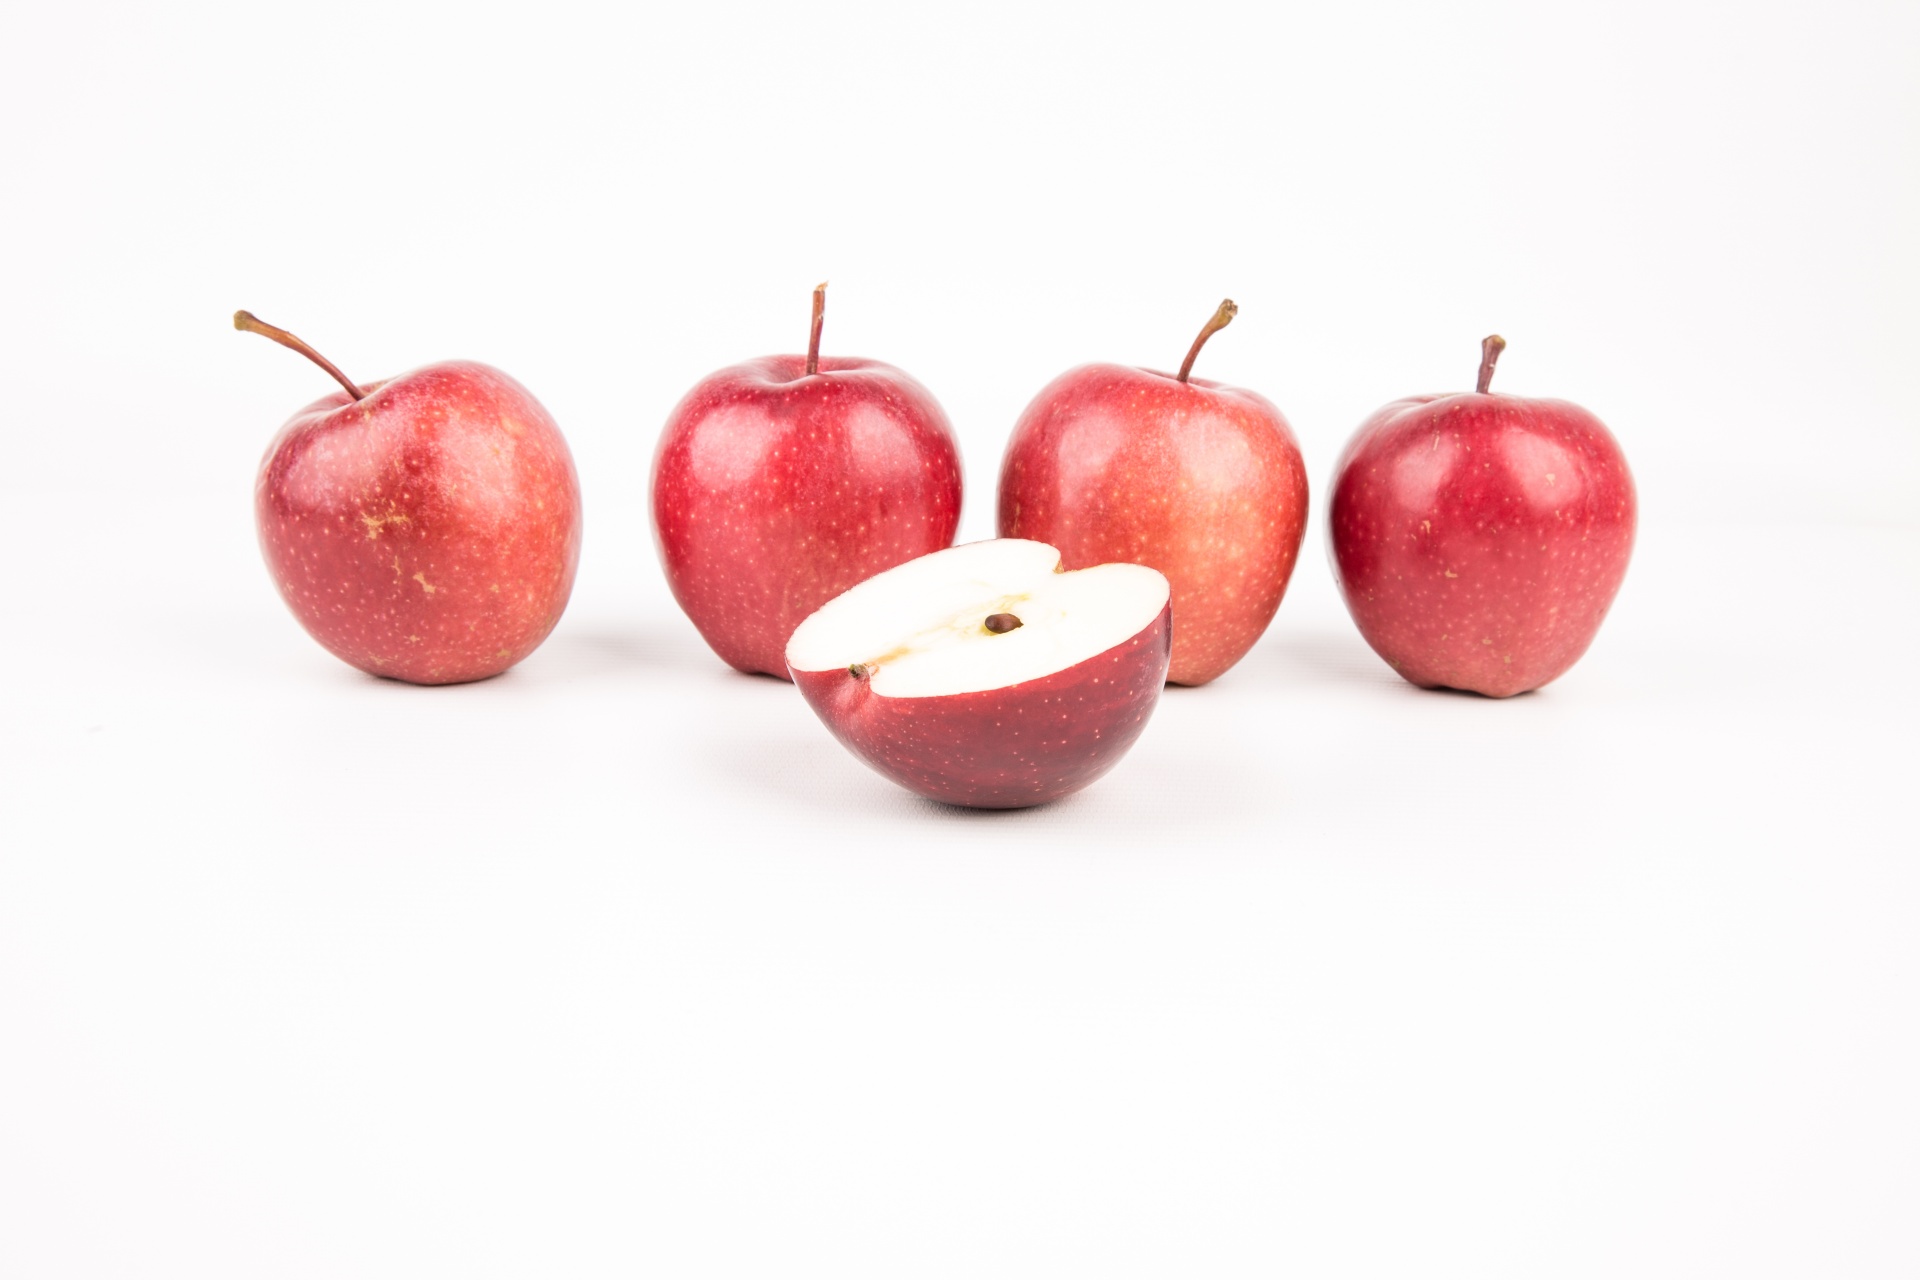 Включи 3 яблока. Яблоки красные. Три яблока. Яблоки 3 штуки. Три яблока картинка.